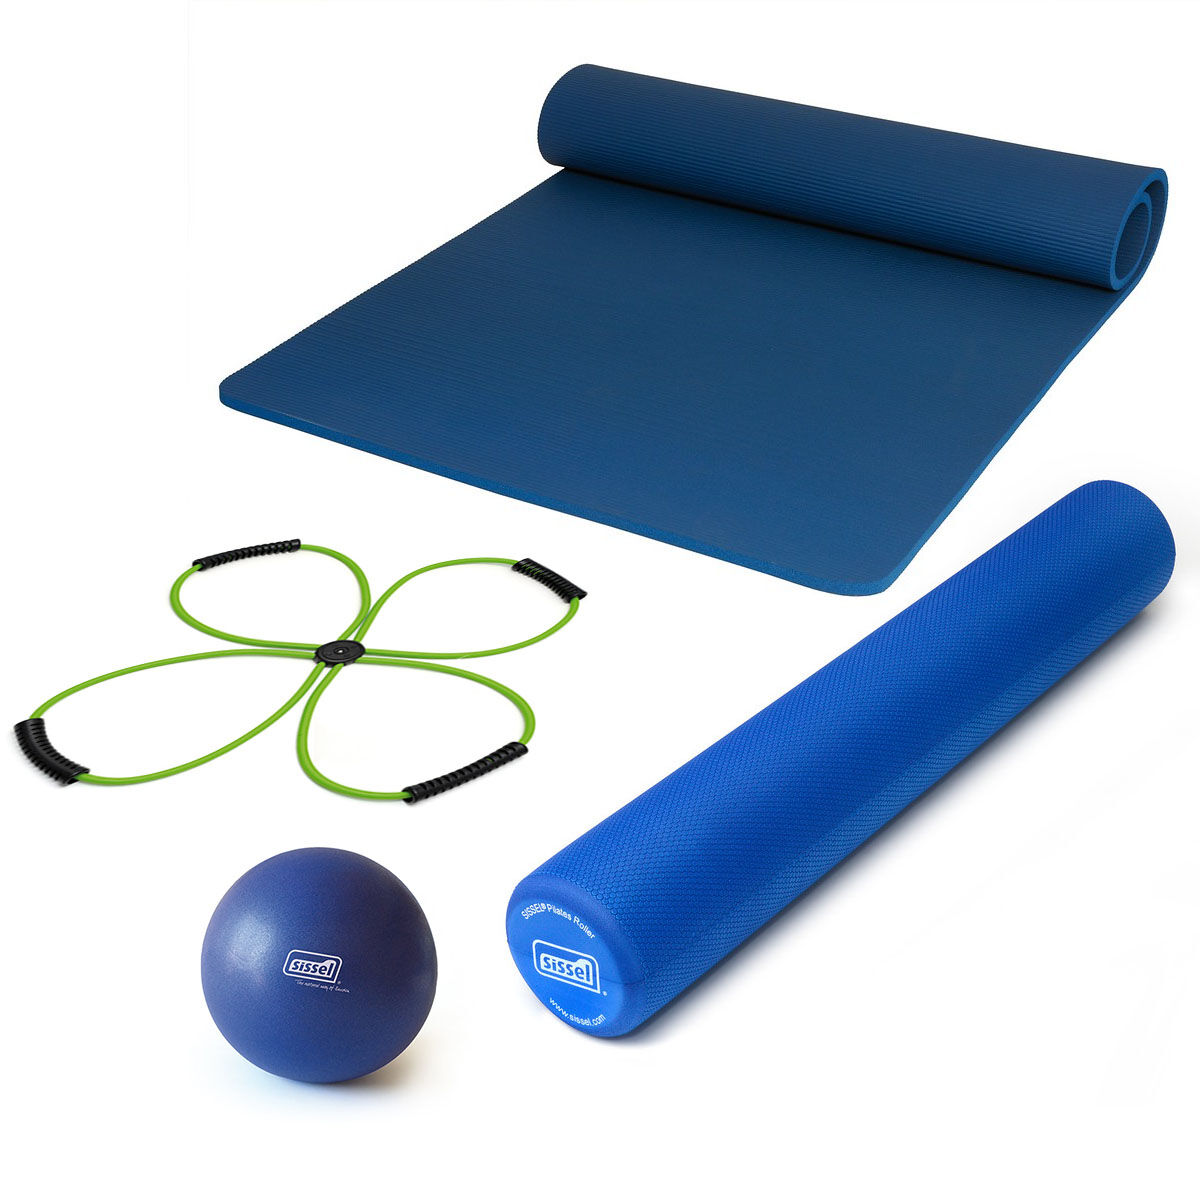 Sissel KIT HOME "FITNESSBRIANZA" 1: Pilates Core Trainer, MatGym Large, Pilates Roller 100 cm, Soft Ball 22 cm